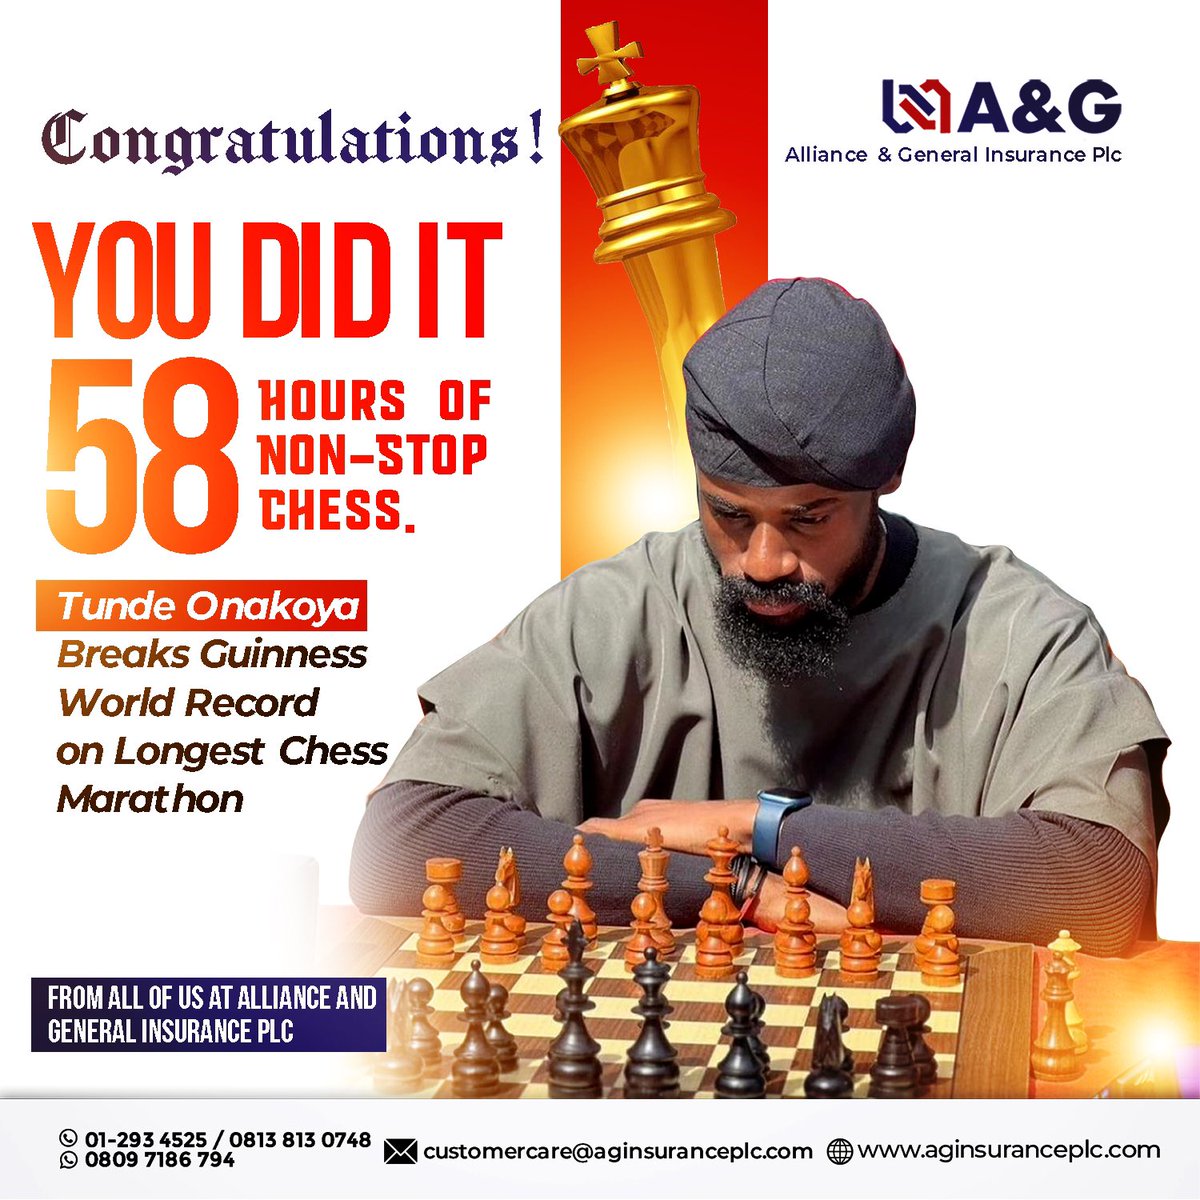 With determination and focus, you can achieve it all. 

Congratulations to @Tunde_OD 

#TundeOnakoya #ChessinSlum #GuinnessWorldRecord #BelieveinYourself #ItCanBeDone #AllianceandGeneralInsurance
#LongestChessMarathon #Nigeria